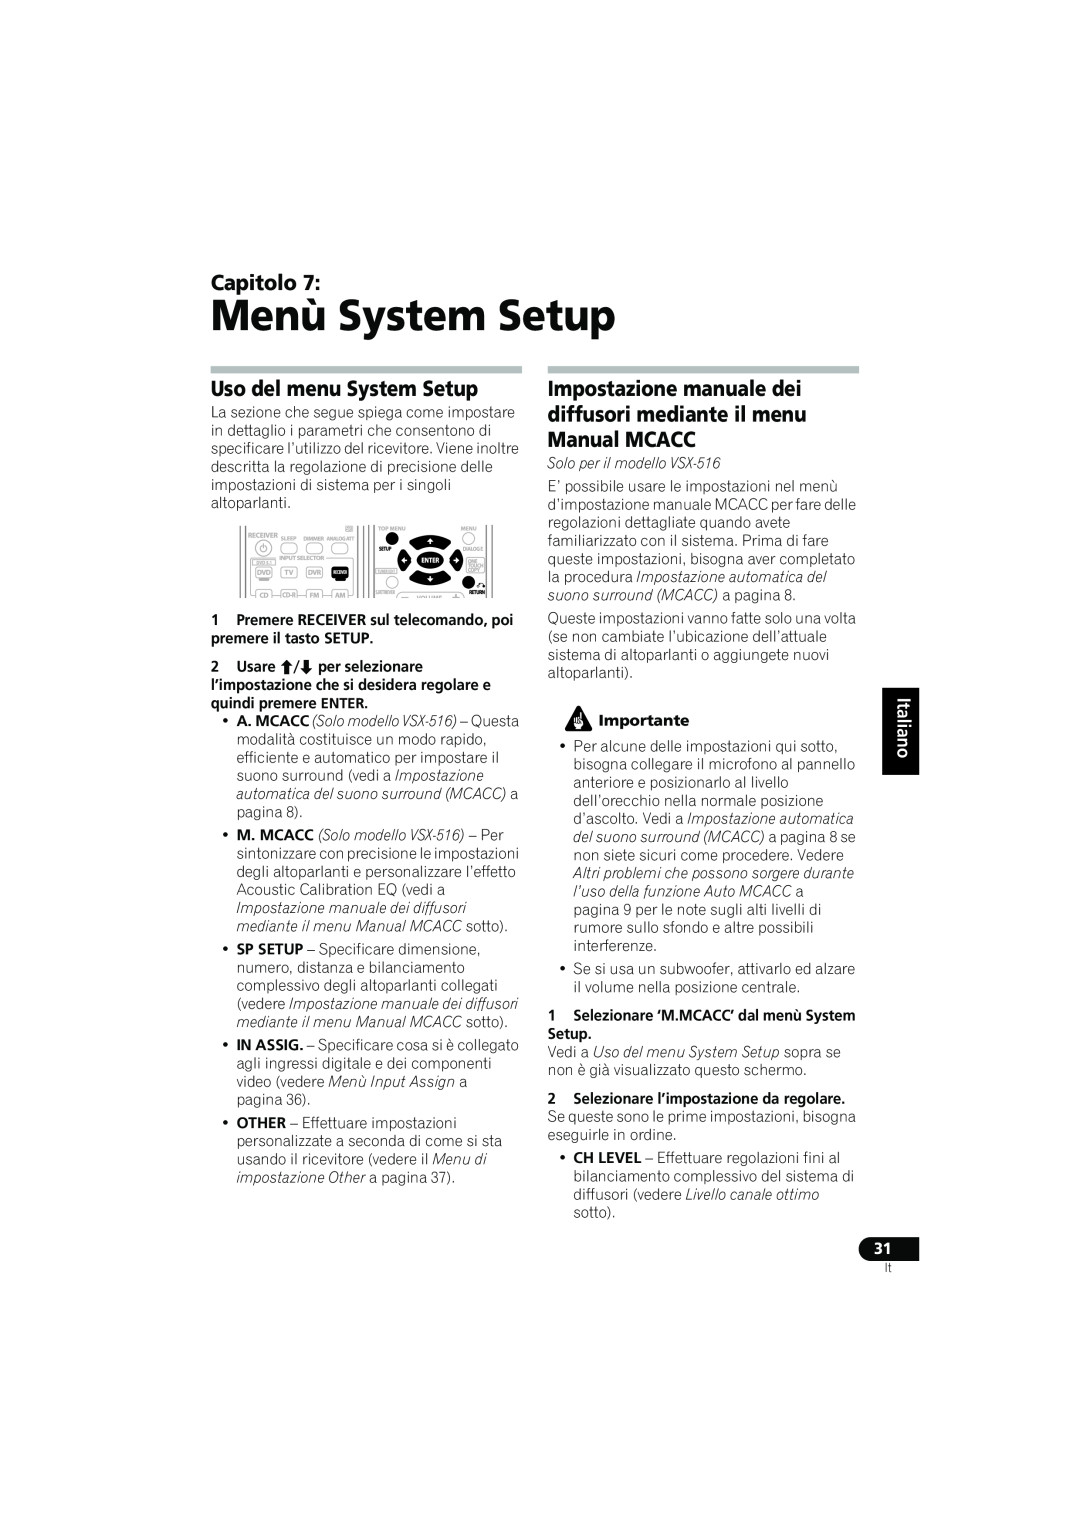 Pioneer VSX-416-K, VSX-516-K, VSX-516-S Menù System Setup, Uso del menu System Setup, Capitolo, Solo per il modello VSX-516 